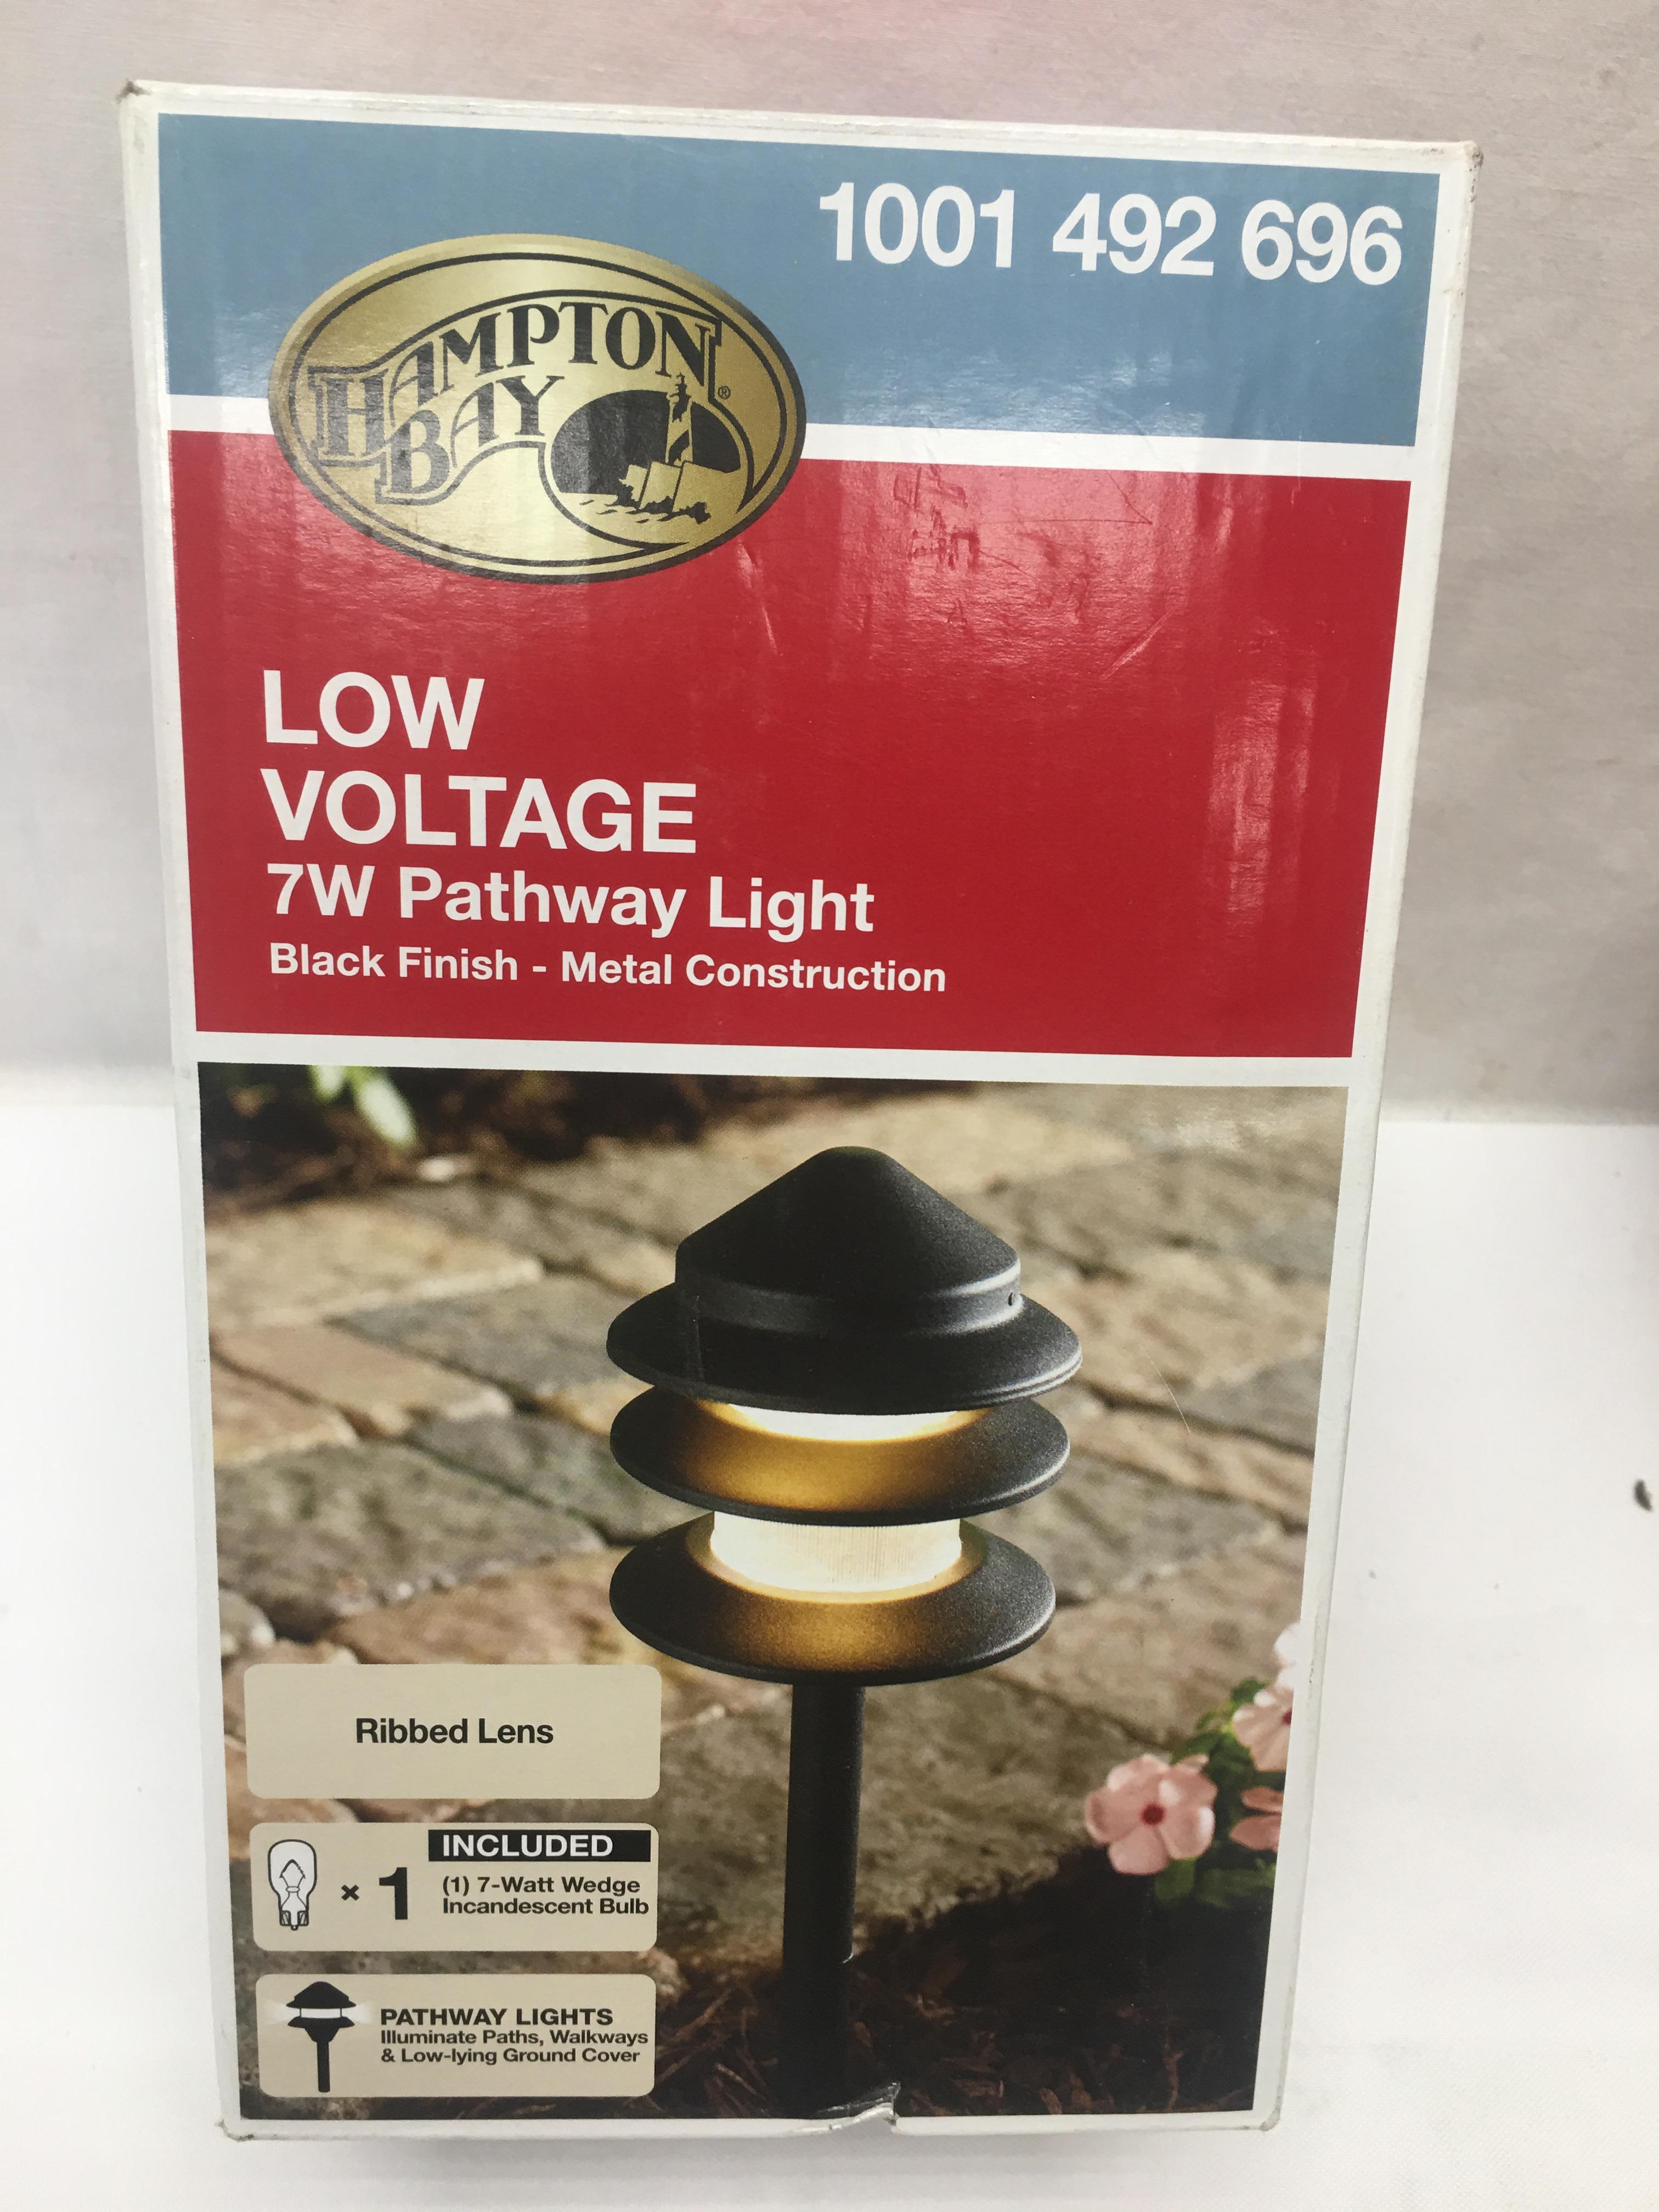 Hampton Bay Low Voltage 7W Pathway Light